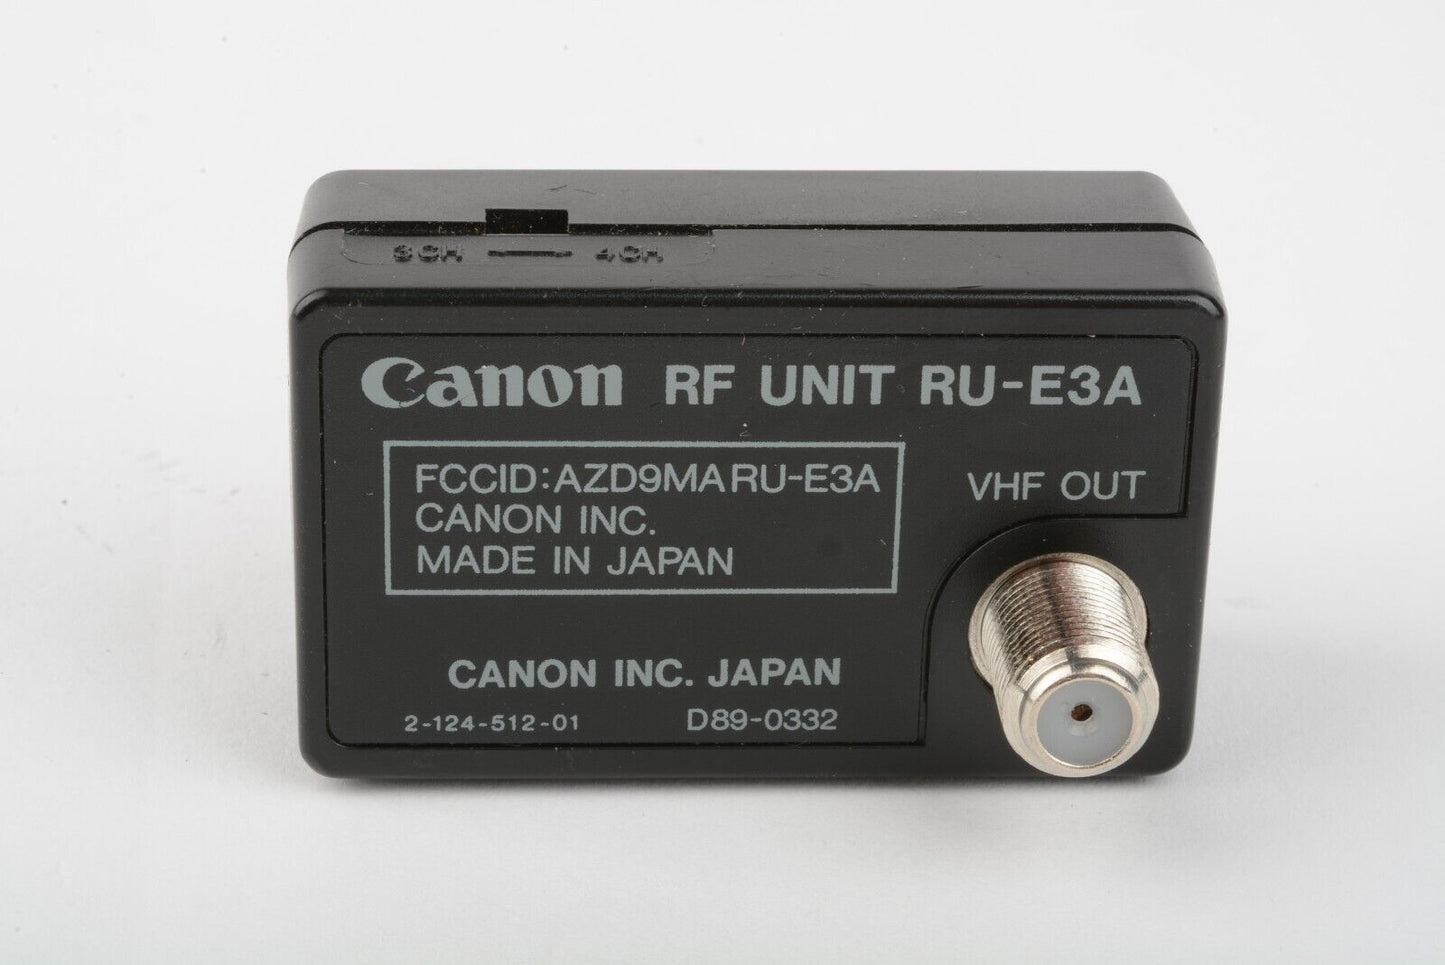 EXC++ GENUINE CANON RF UNIT RU-E3A ADAPTER, VERY CLEAN